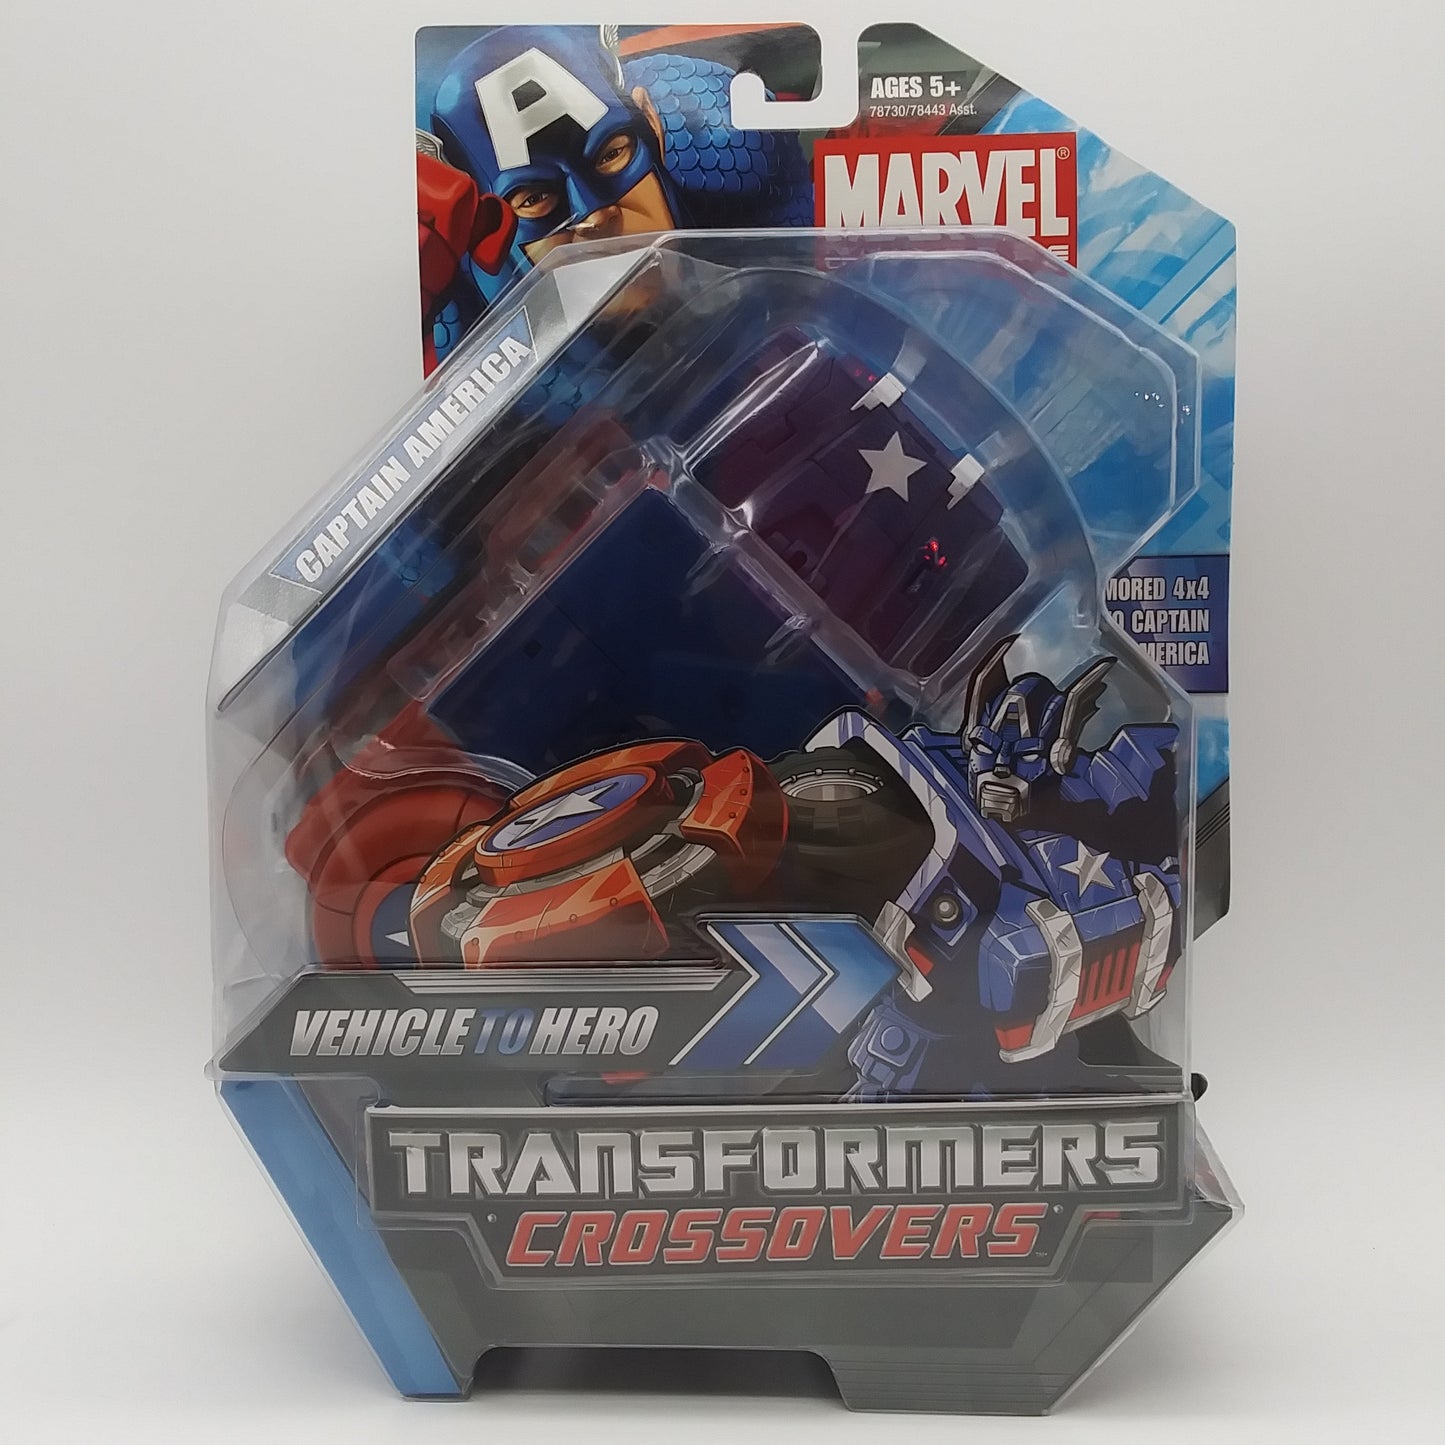 Marvel Universe Transformers Crossovers Captain America